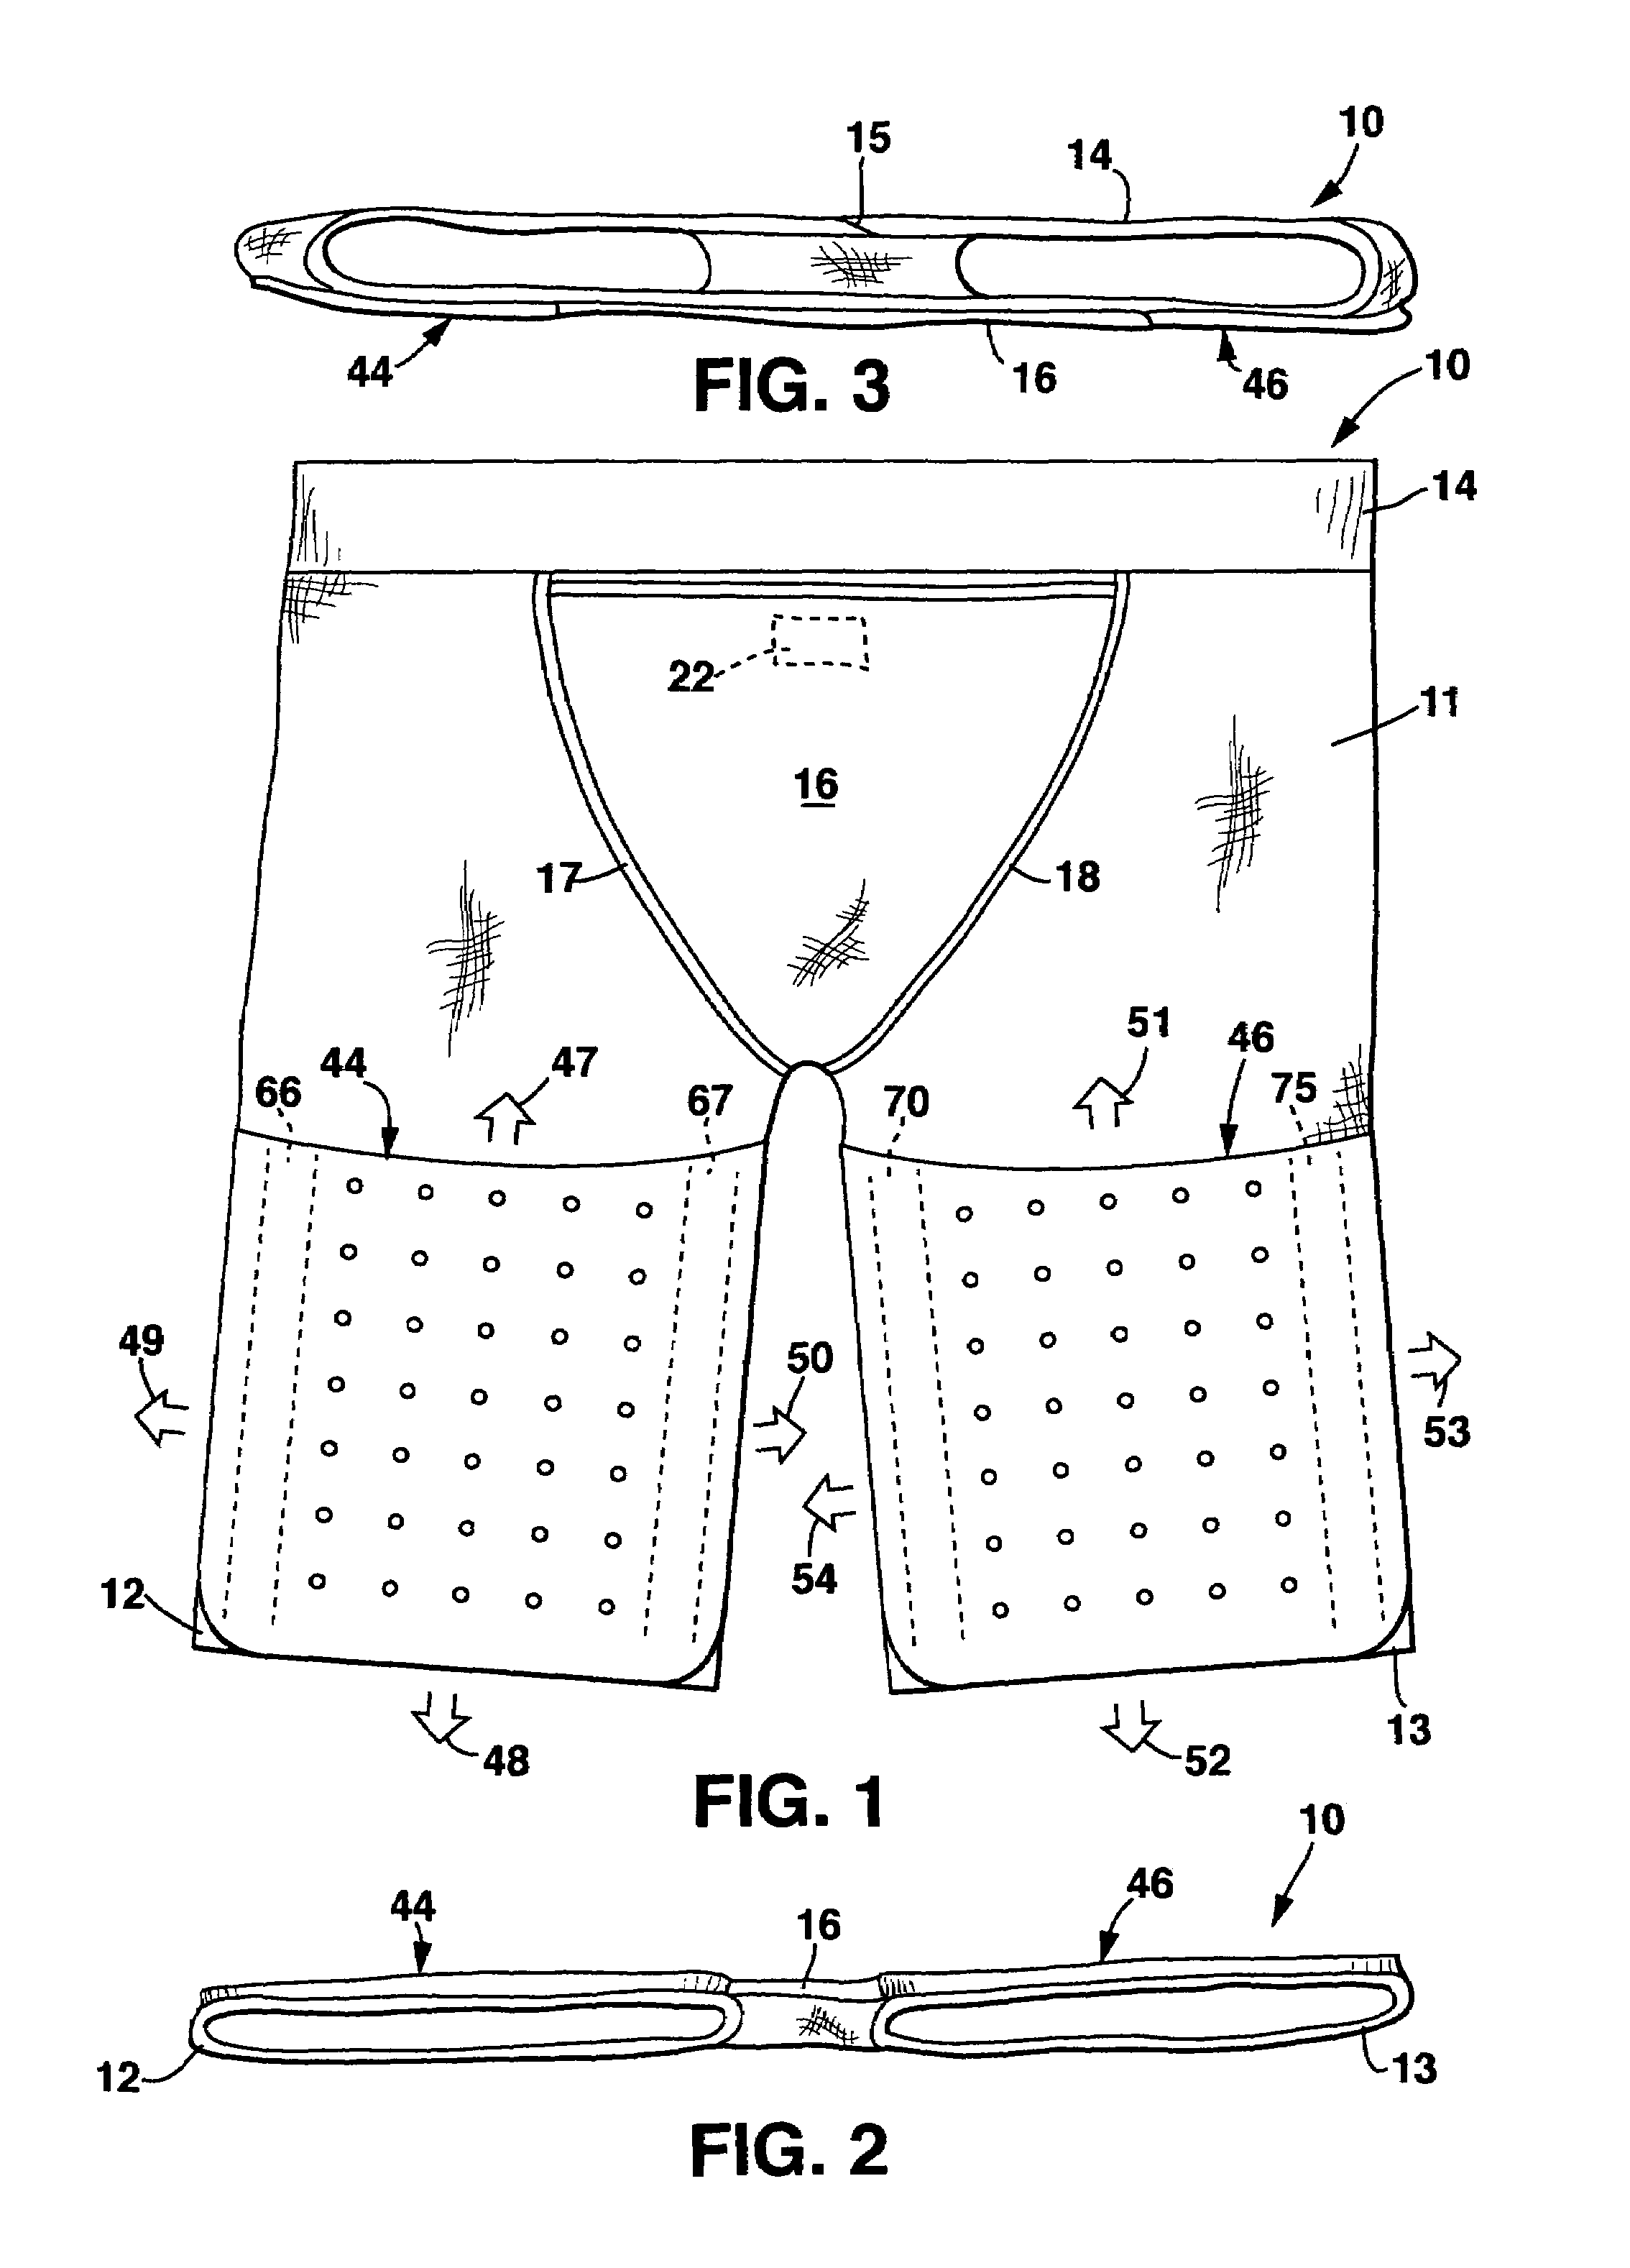 Athletic garment with adjustable leg shields